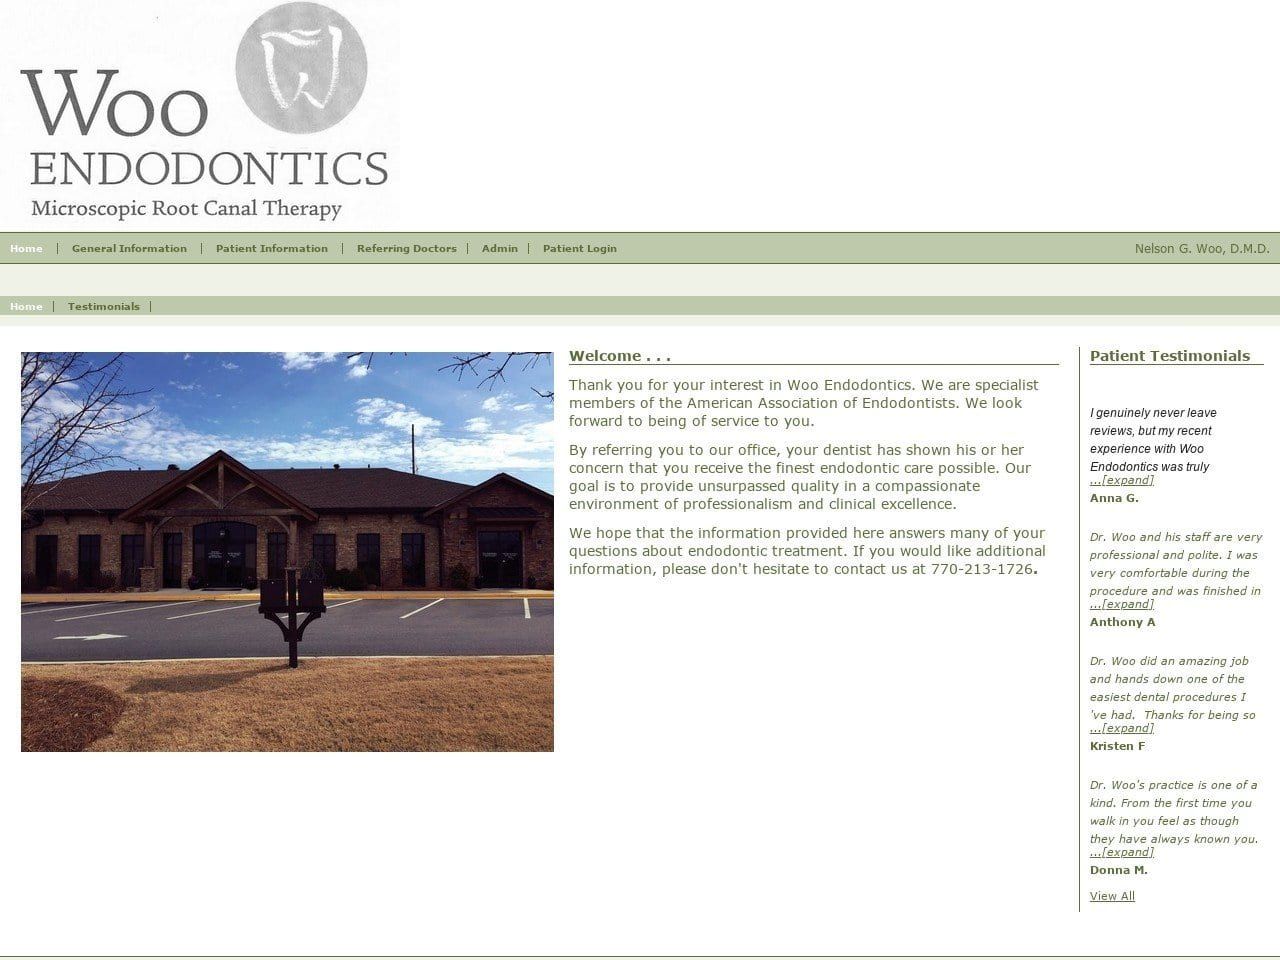 Woo Endodontics Website Screenshot from wooendo.com